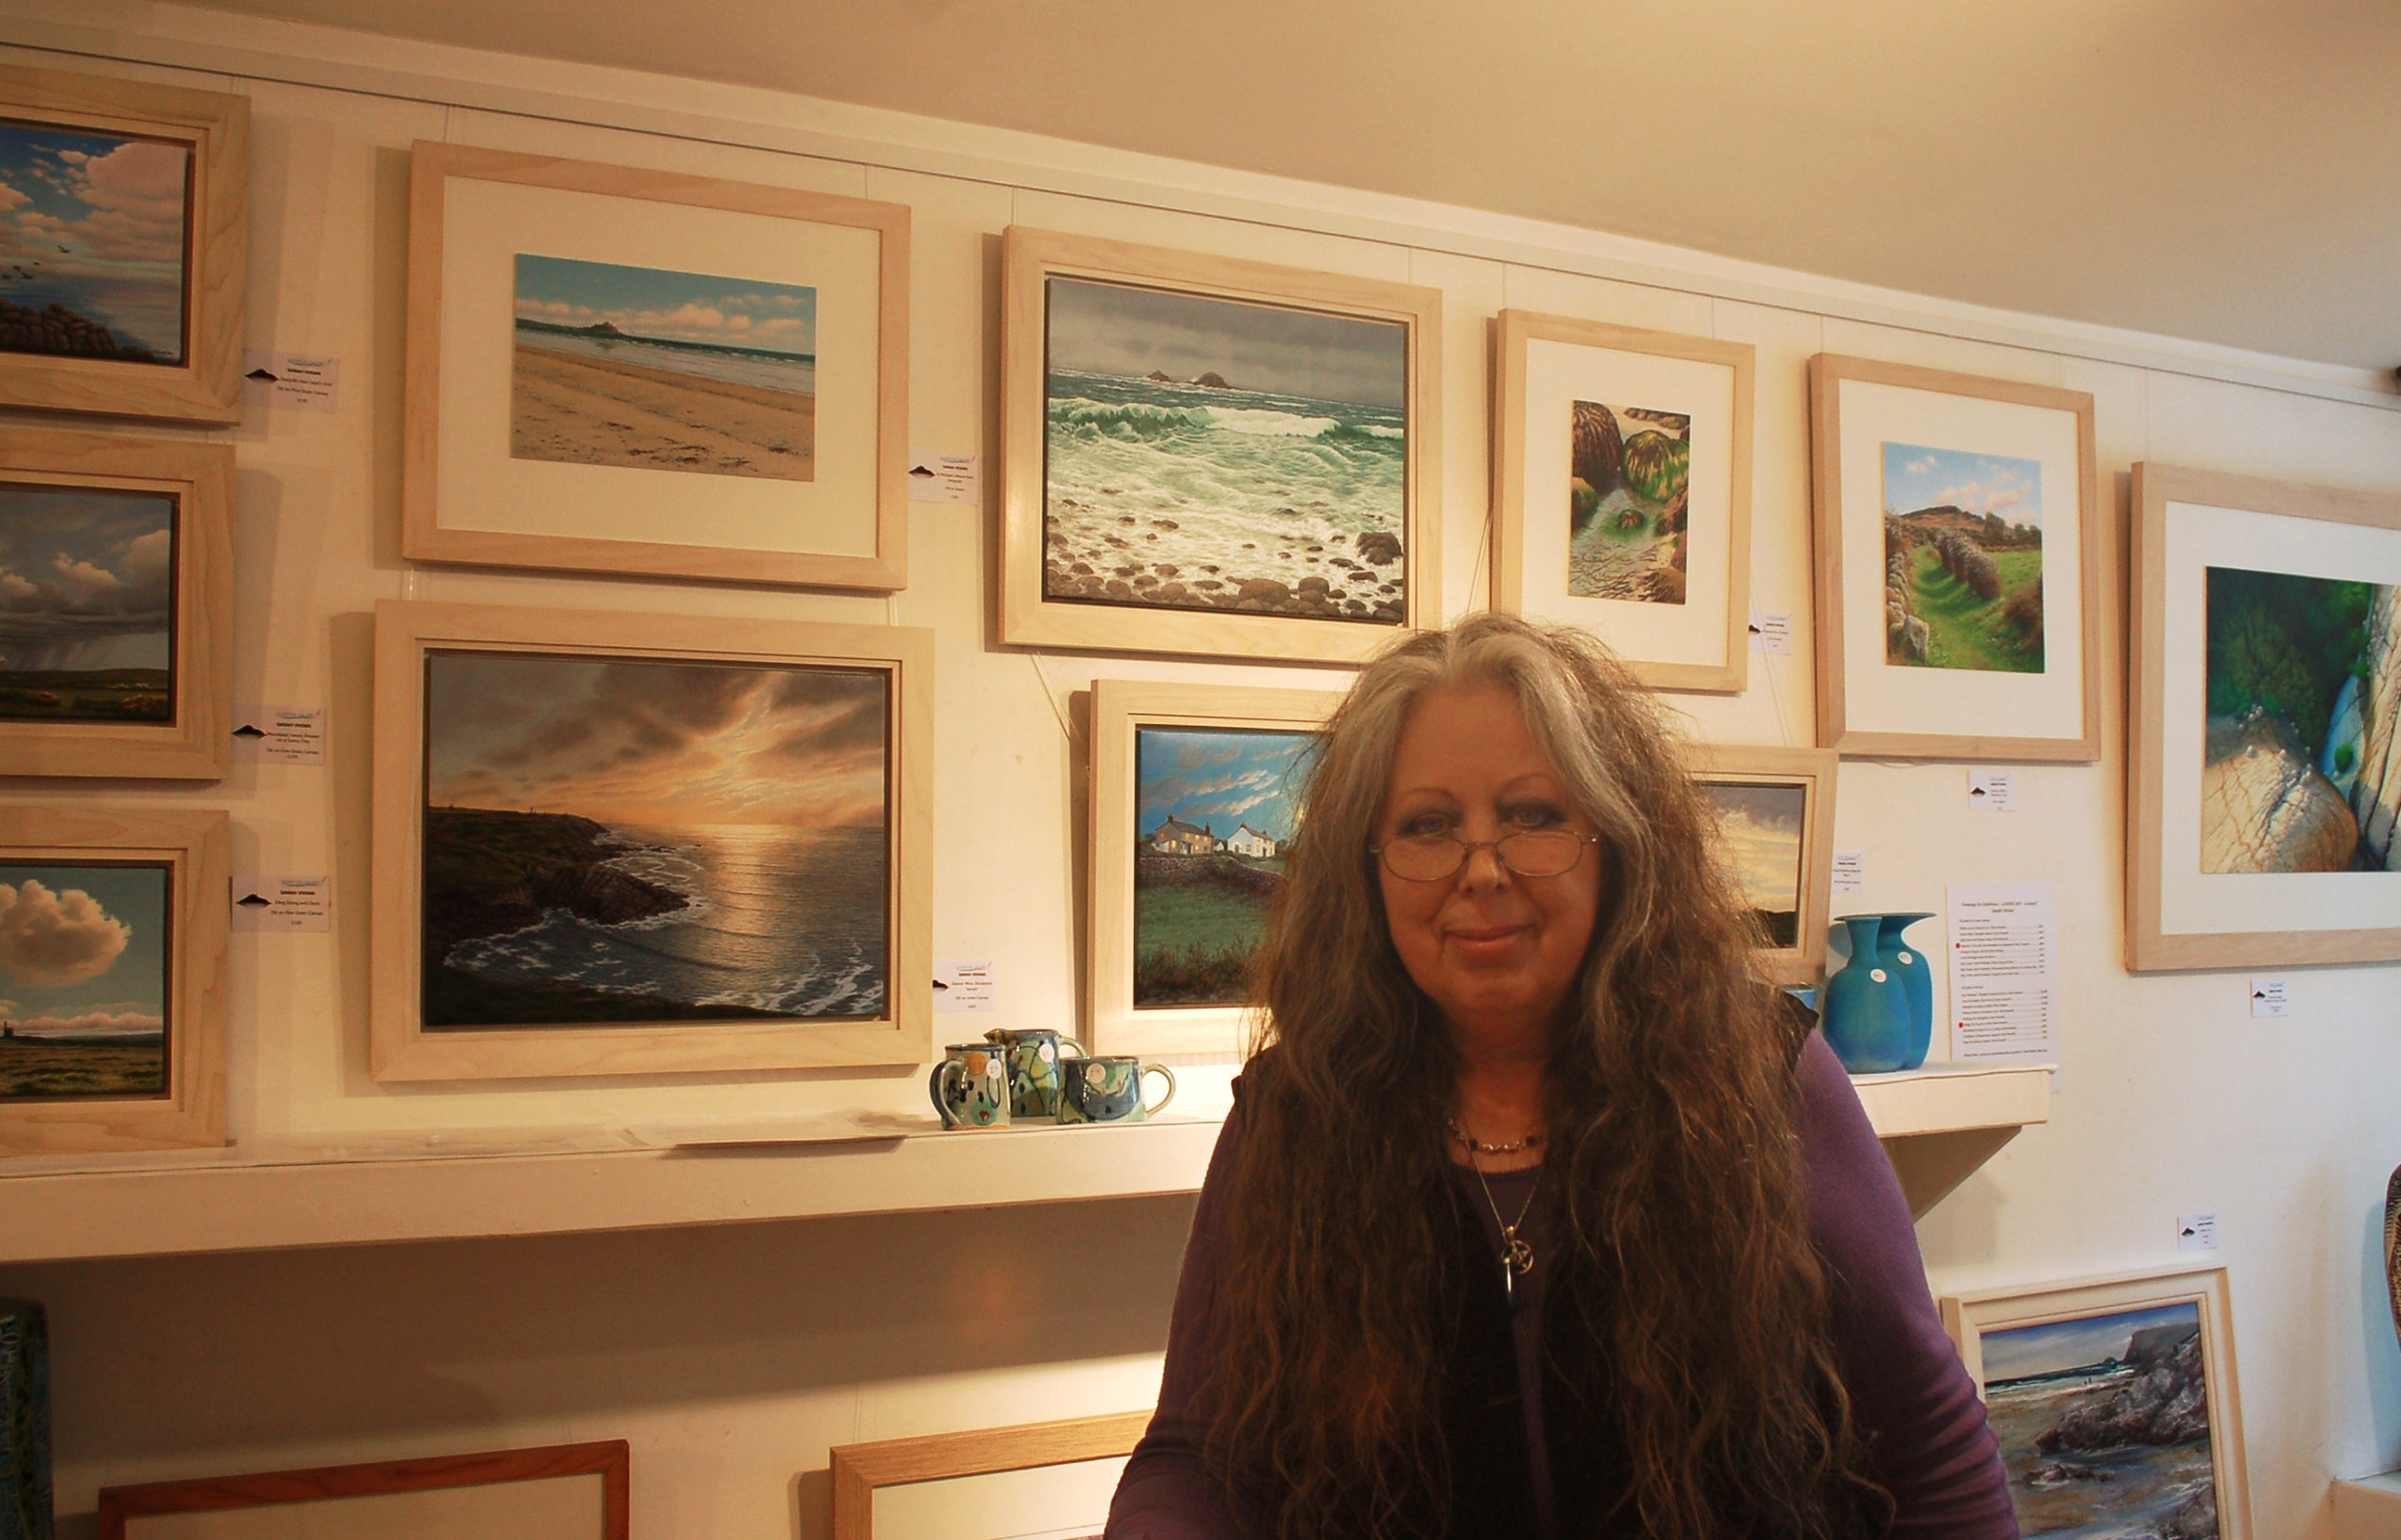 Alverton Gallery Exhibition of Cornish Artist Sarah Vivian's Paintings